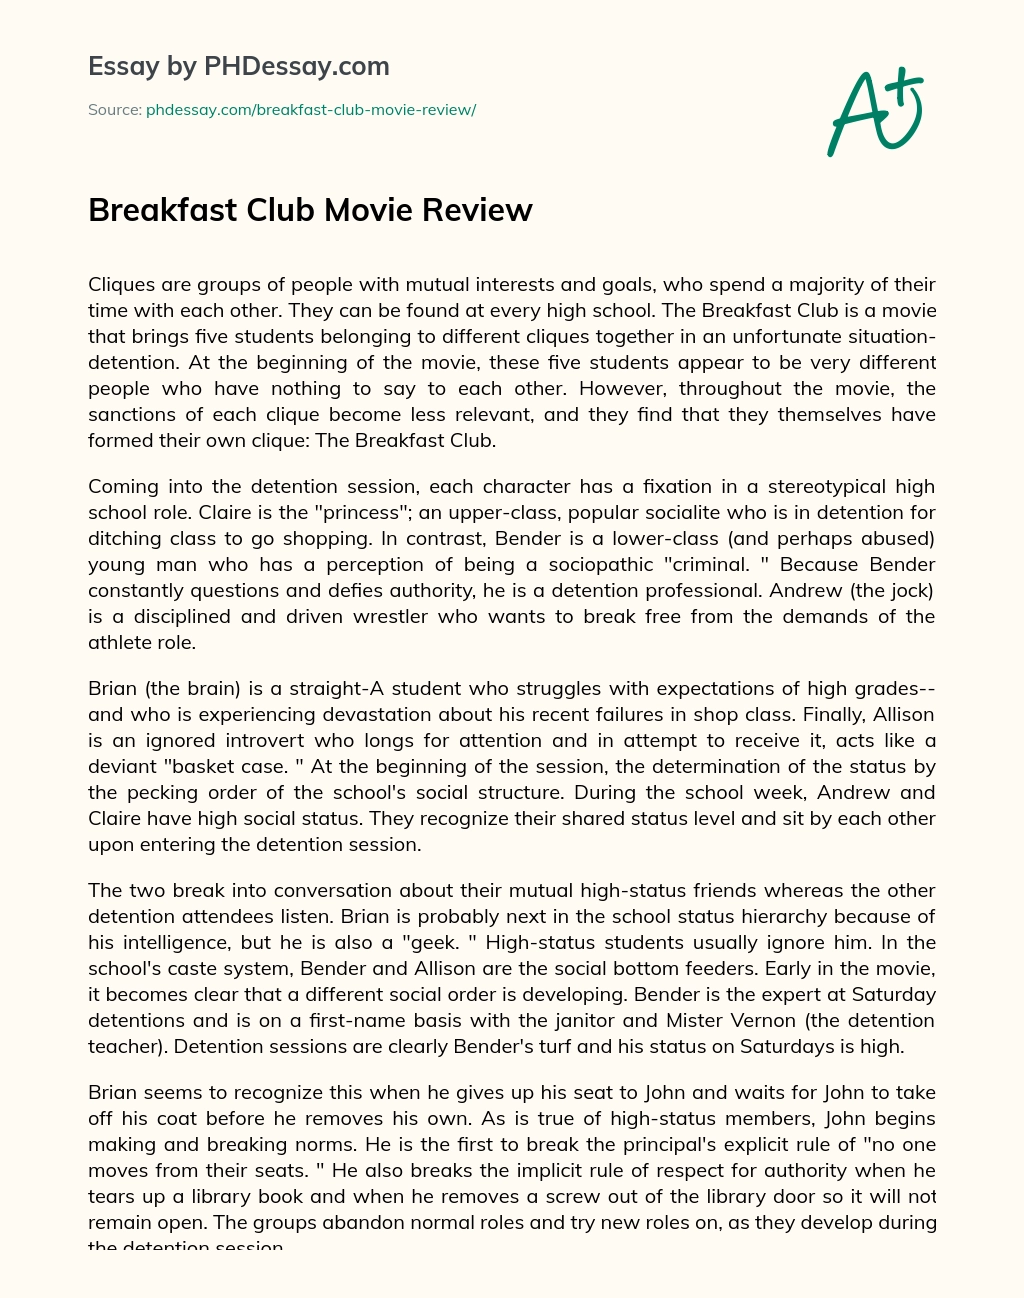 Breakfast Club Movie Review essay